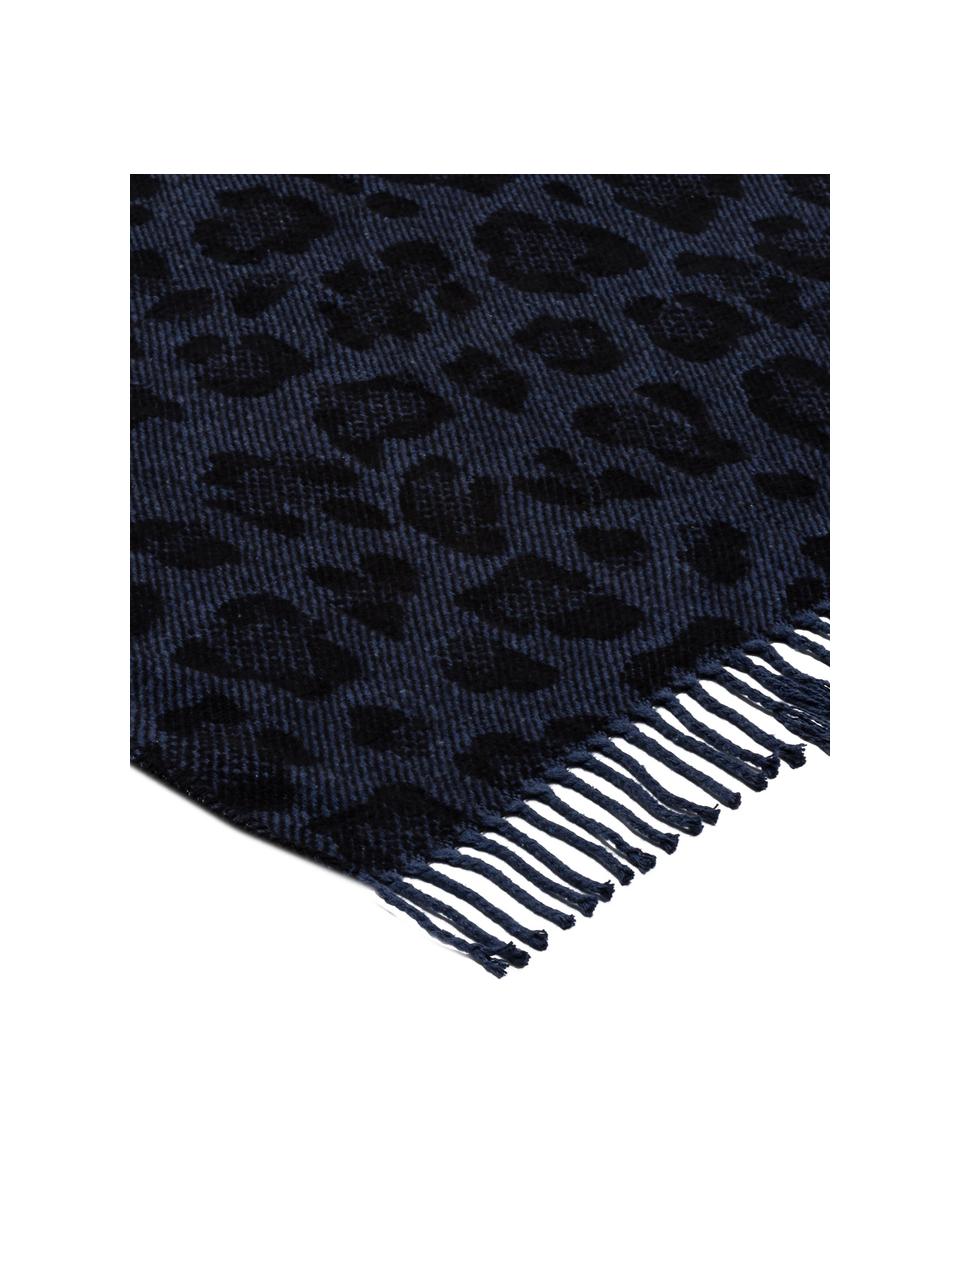 Plaid Bory met luipaarden print, 60% katoen, 40% acryl, Blauw, 150 x 200 cm